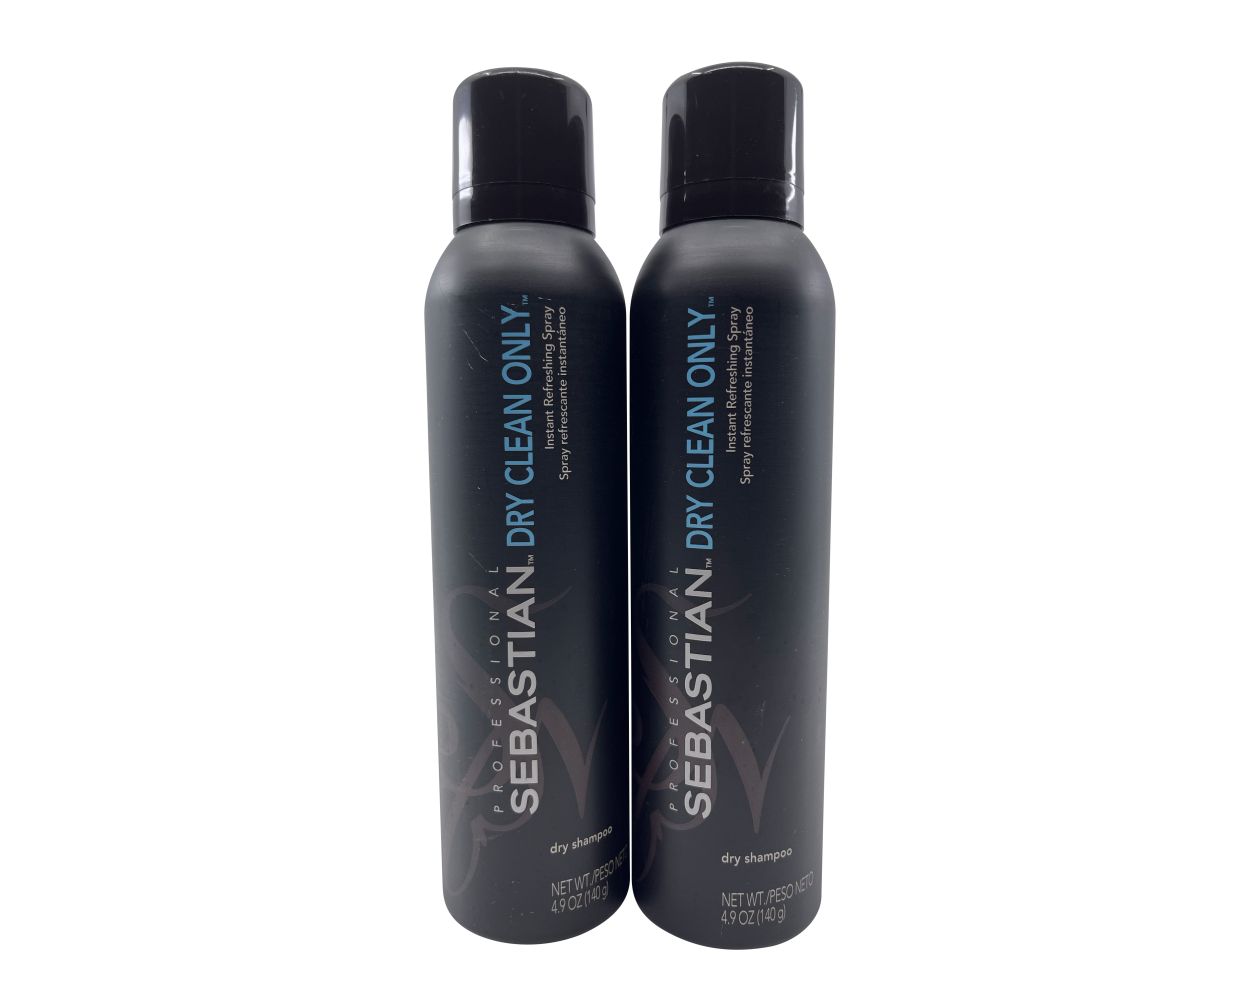 Sebastian Professional Dry Clean Only Refreshing Spray Dry Shampoo Set of 2 | Shampoo Beautyvice.com